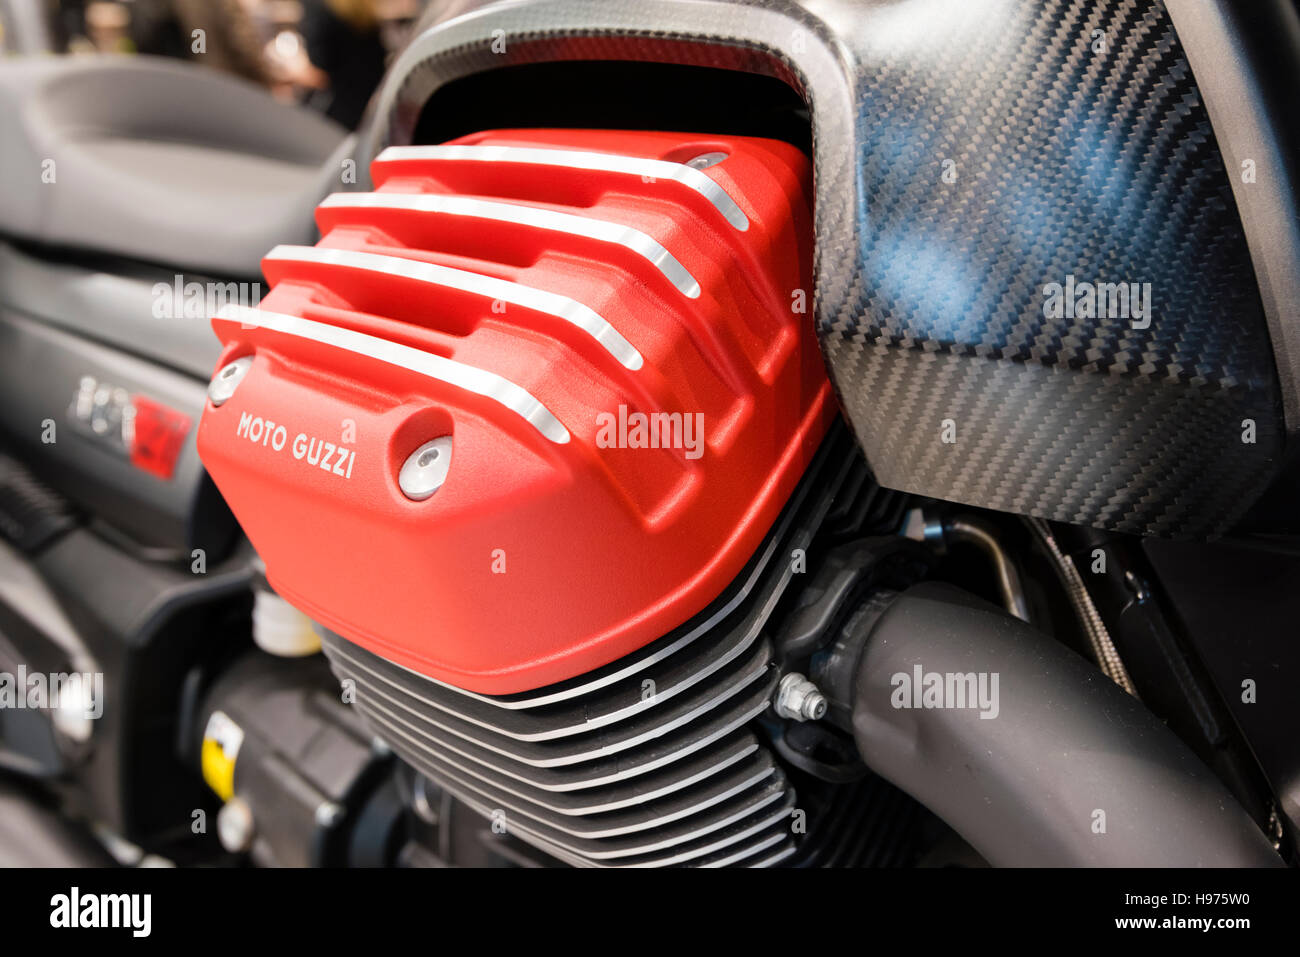 Motor guzzi motorbike motorcycle hi-res stock photography and images - Alamy